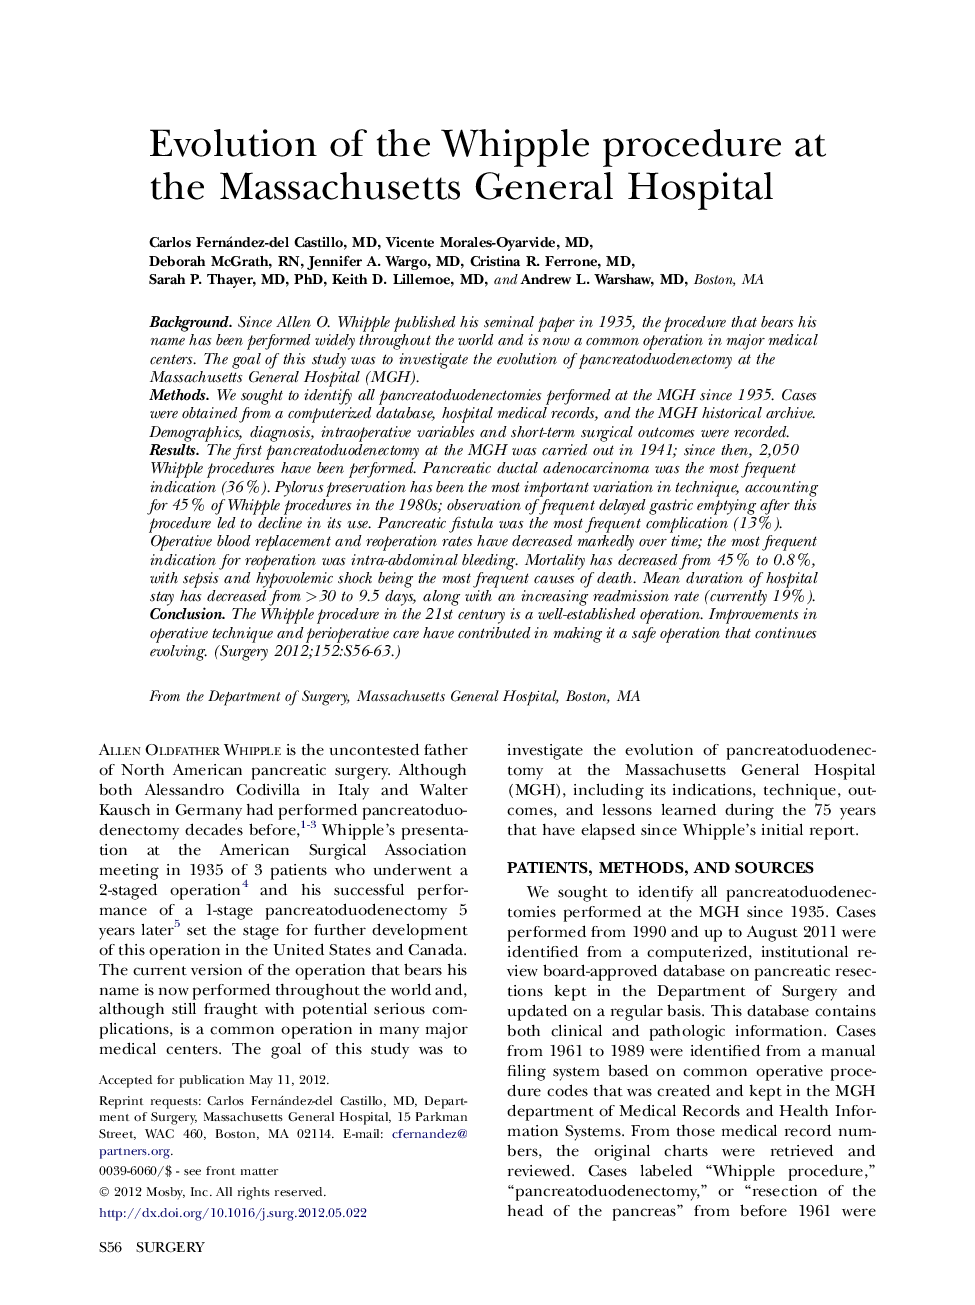 Evolution of the Whipple procedure at the Massachusetts General Hospital